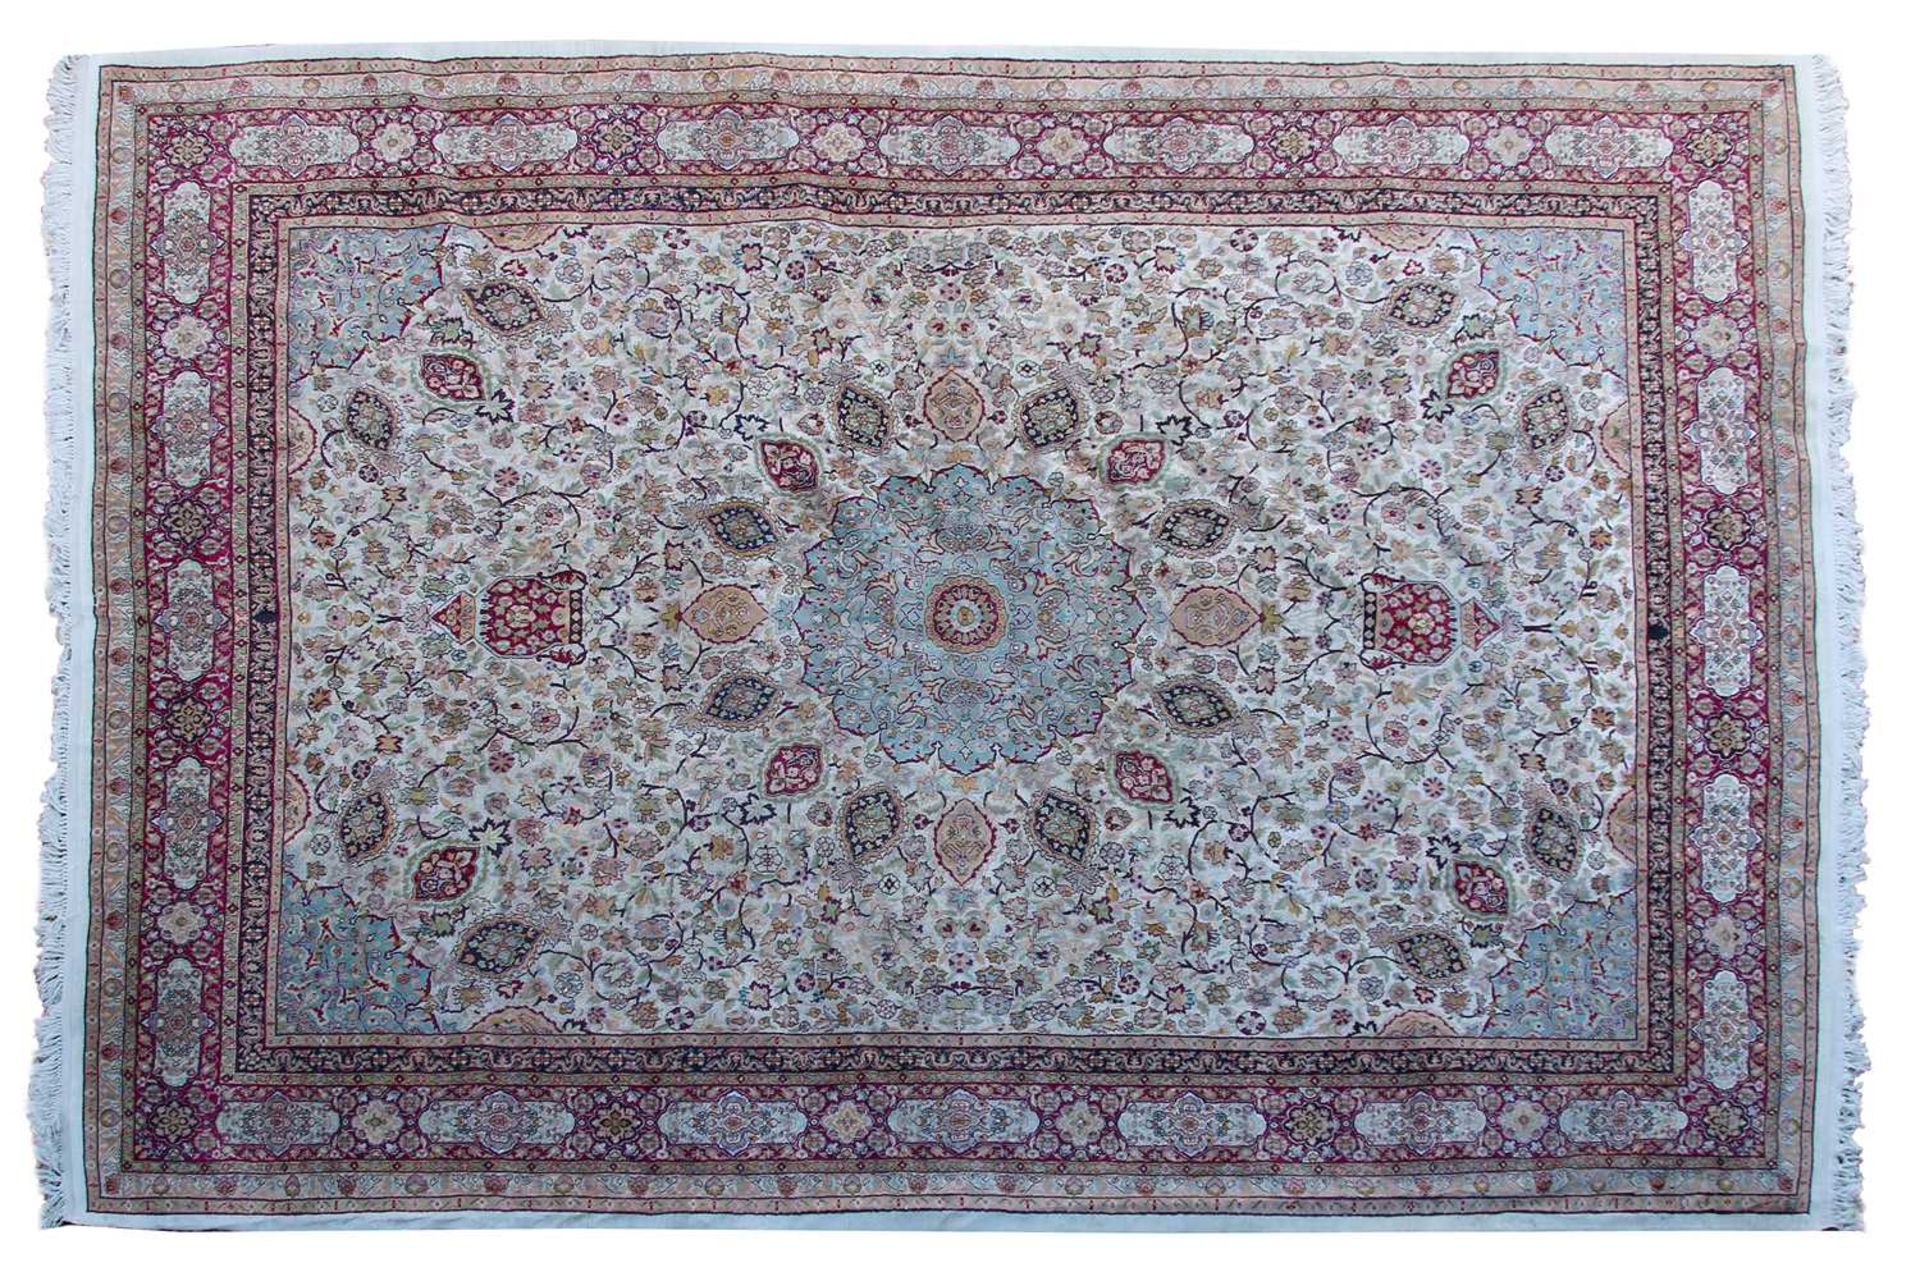 A wool and silk Isfahan rug